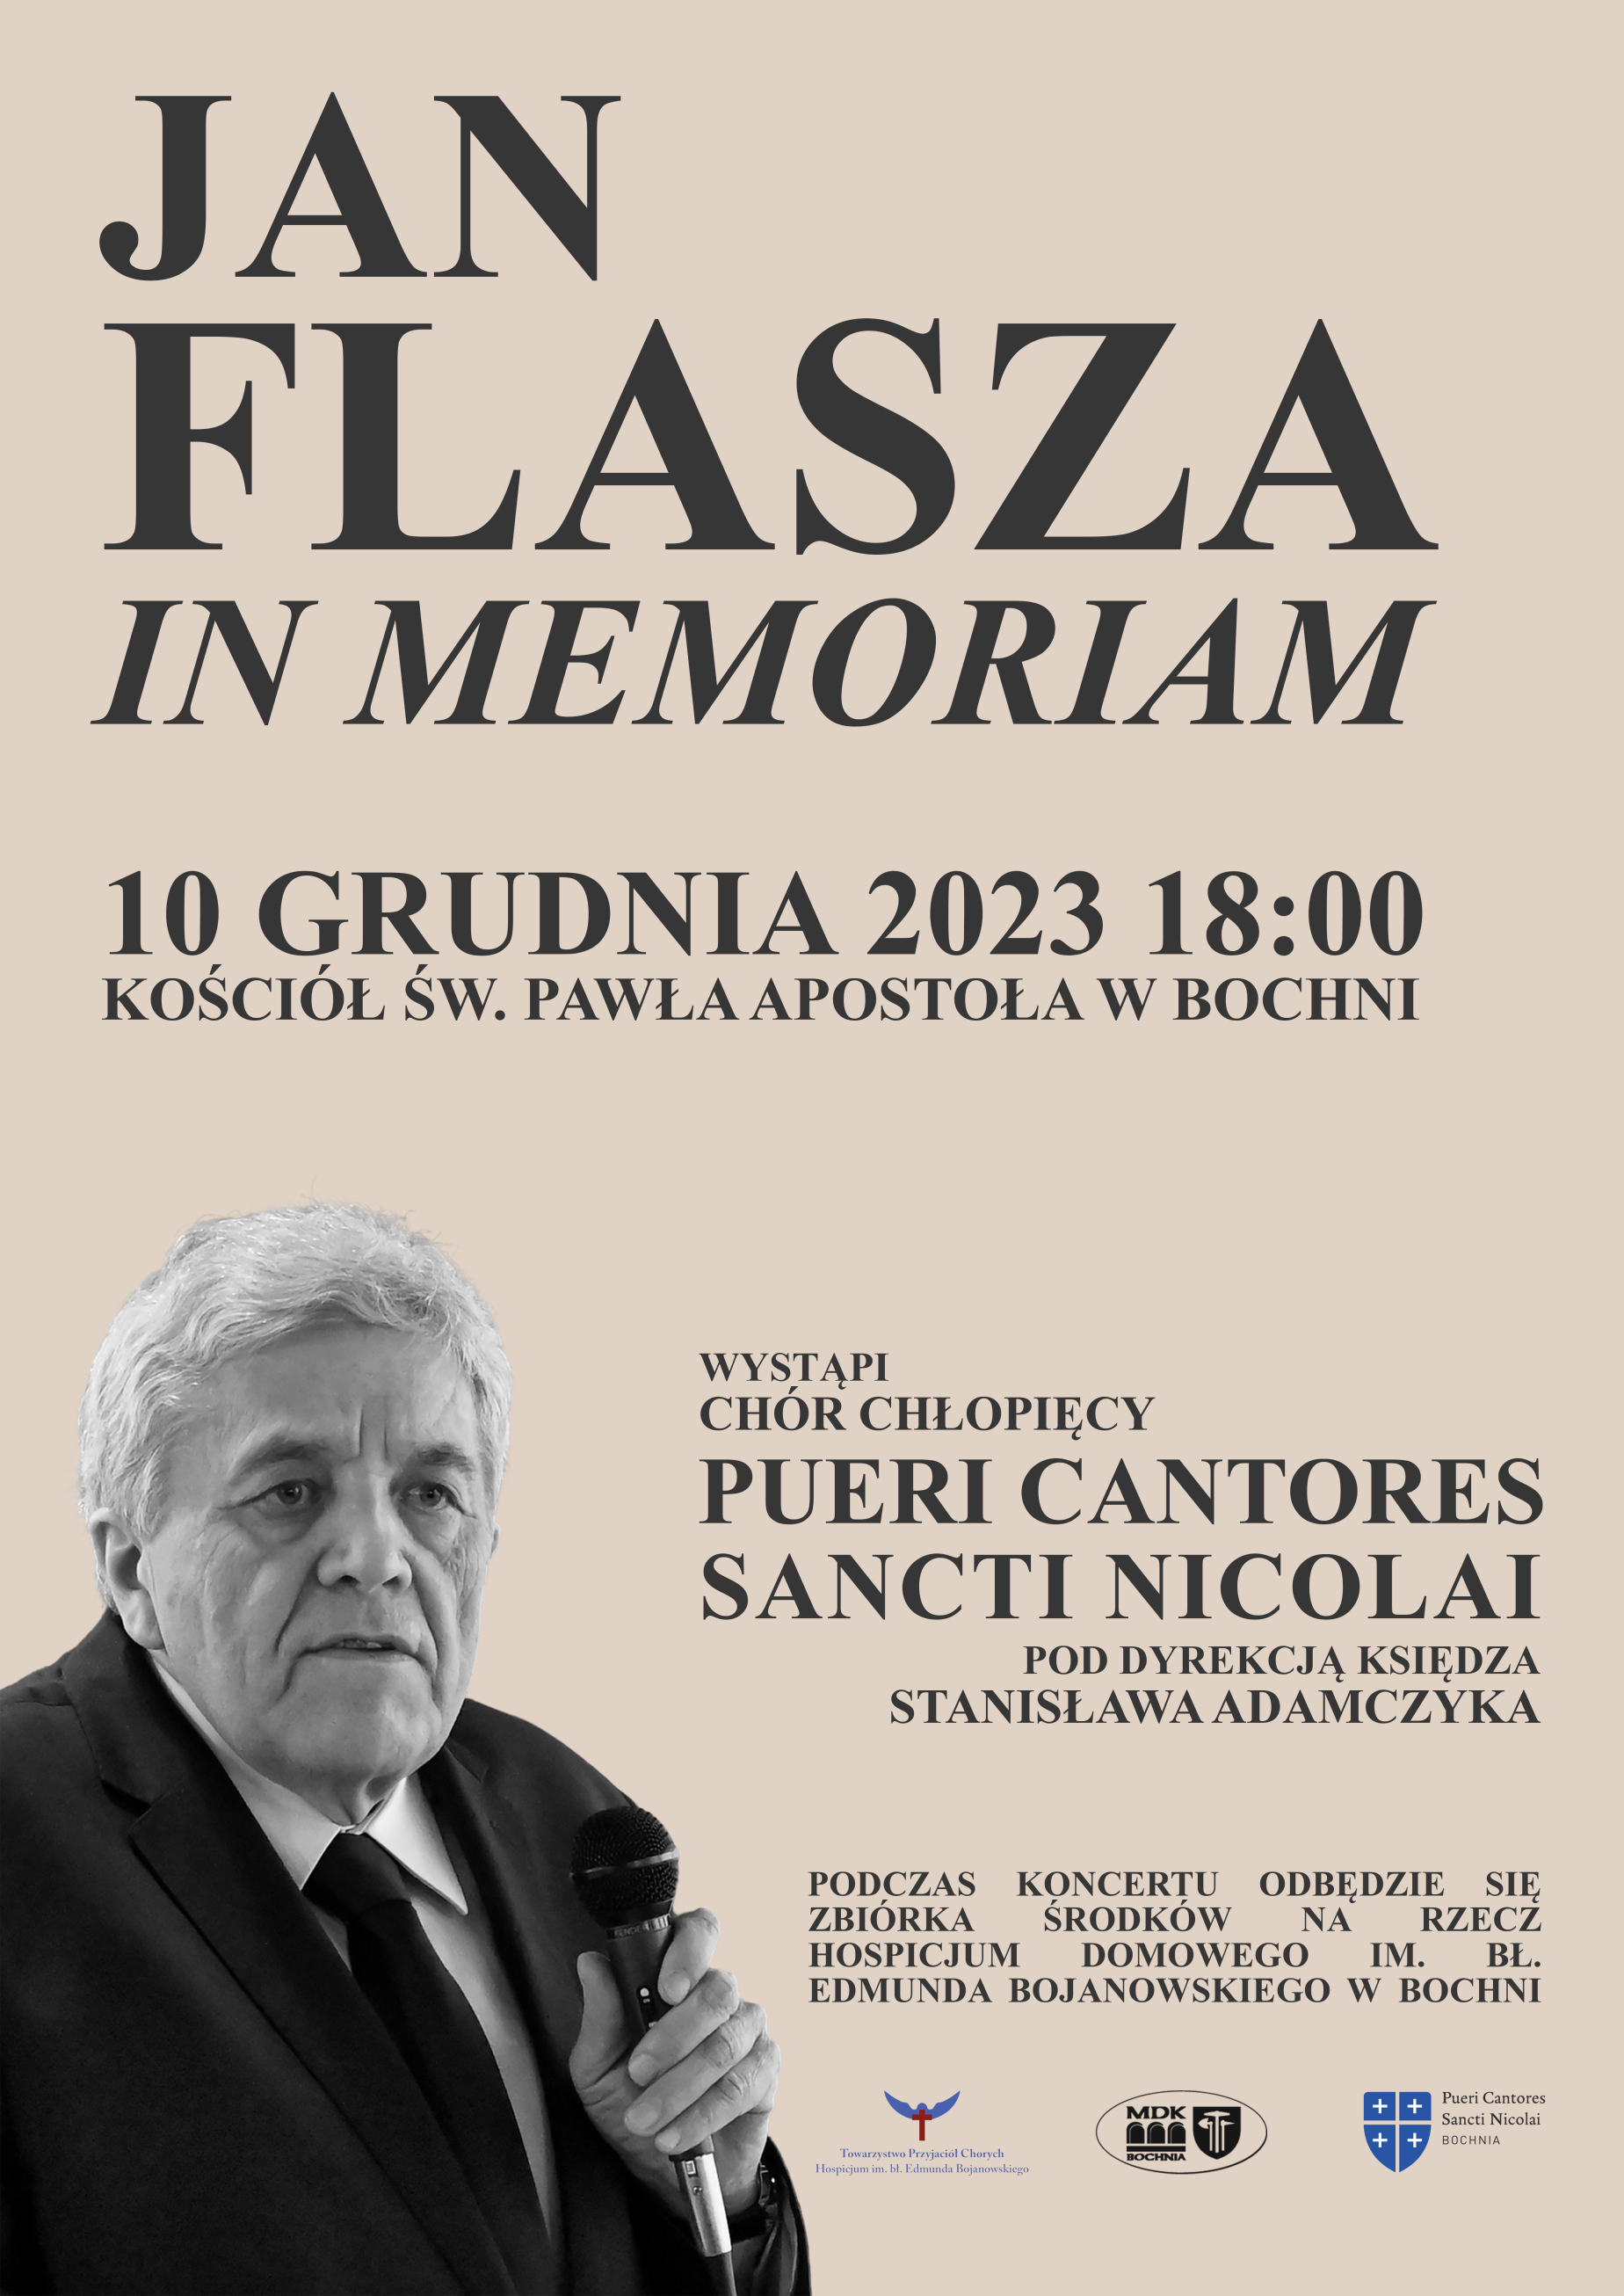 Jan Flasza - in memoriam